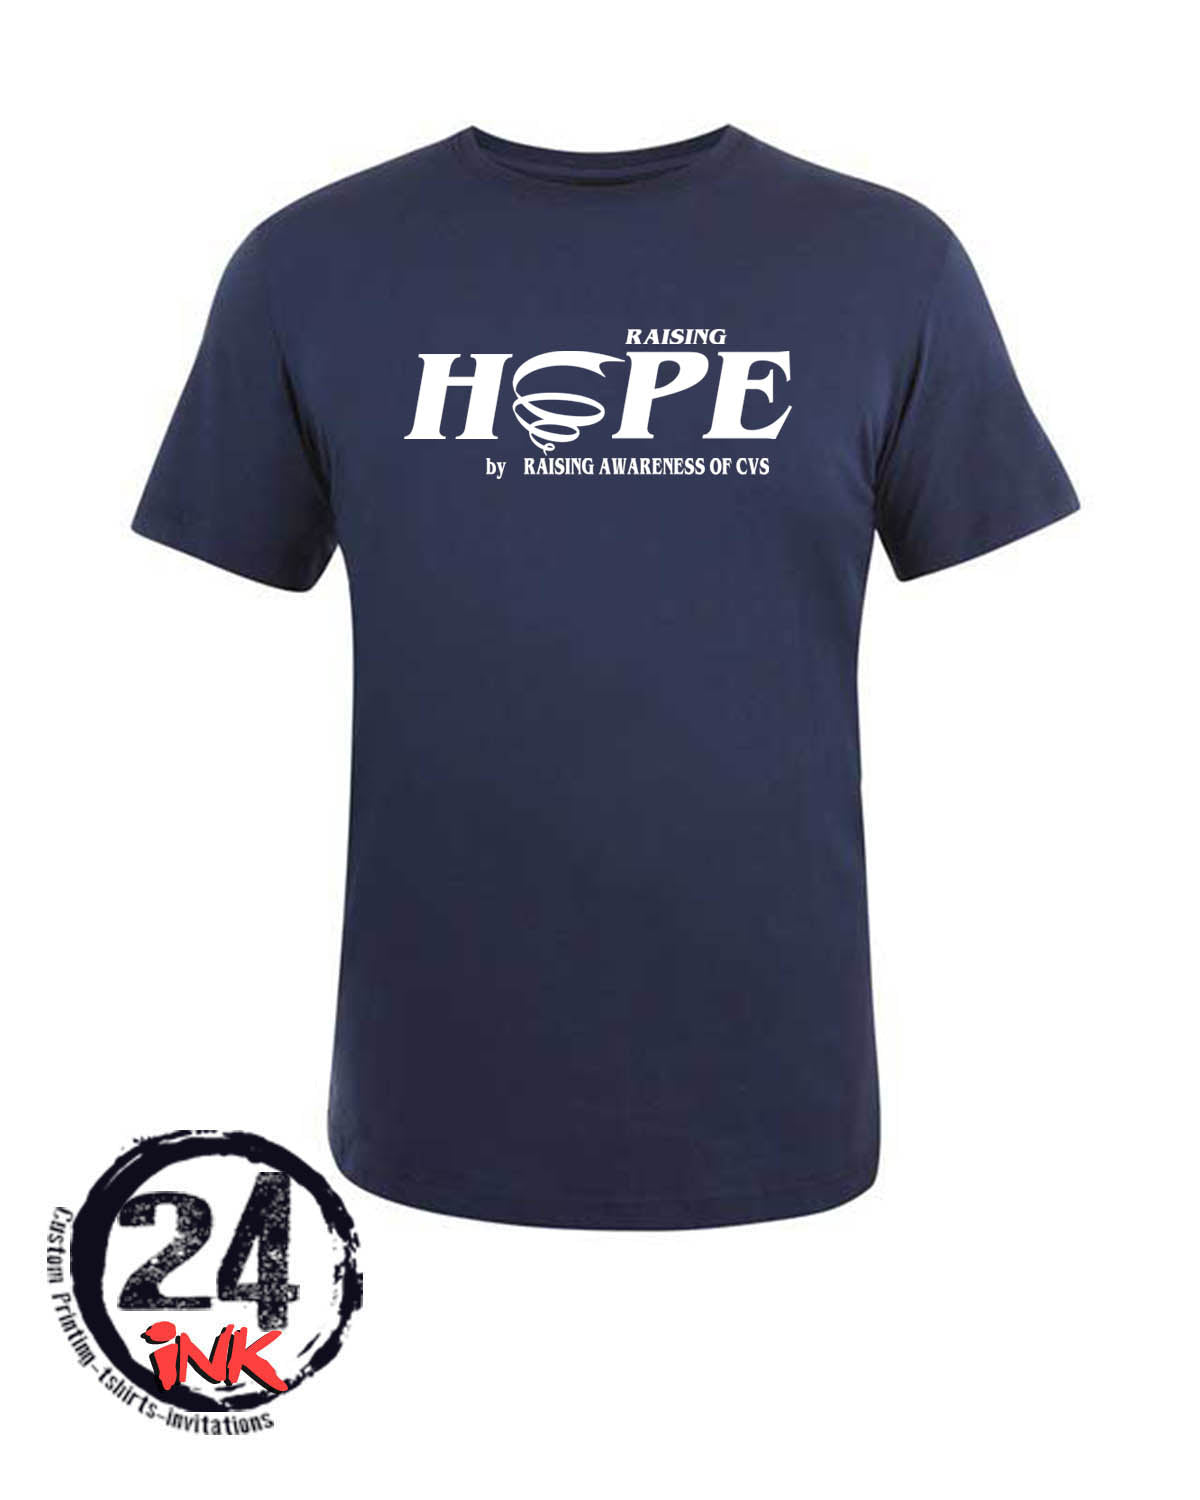 Hope T-Shirt, CVS, Cyclic vomiting syndrome, walk shirts